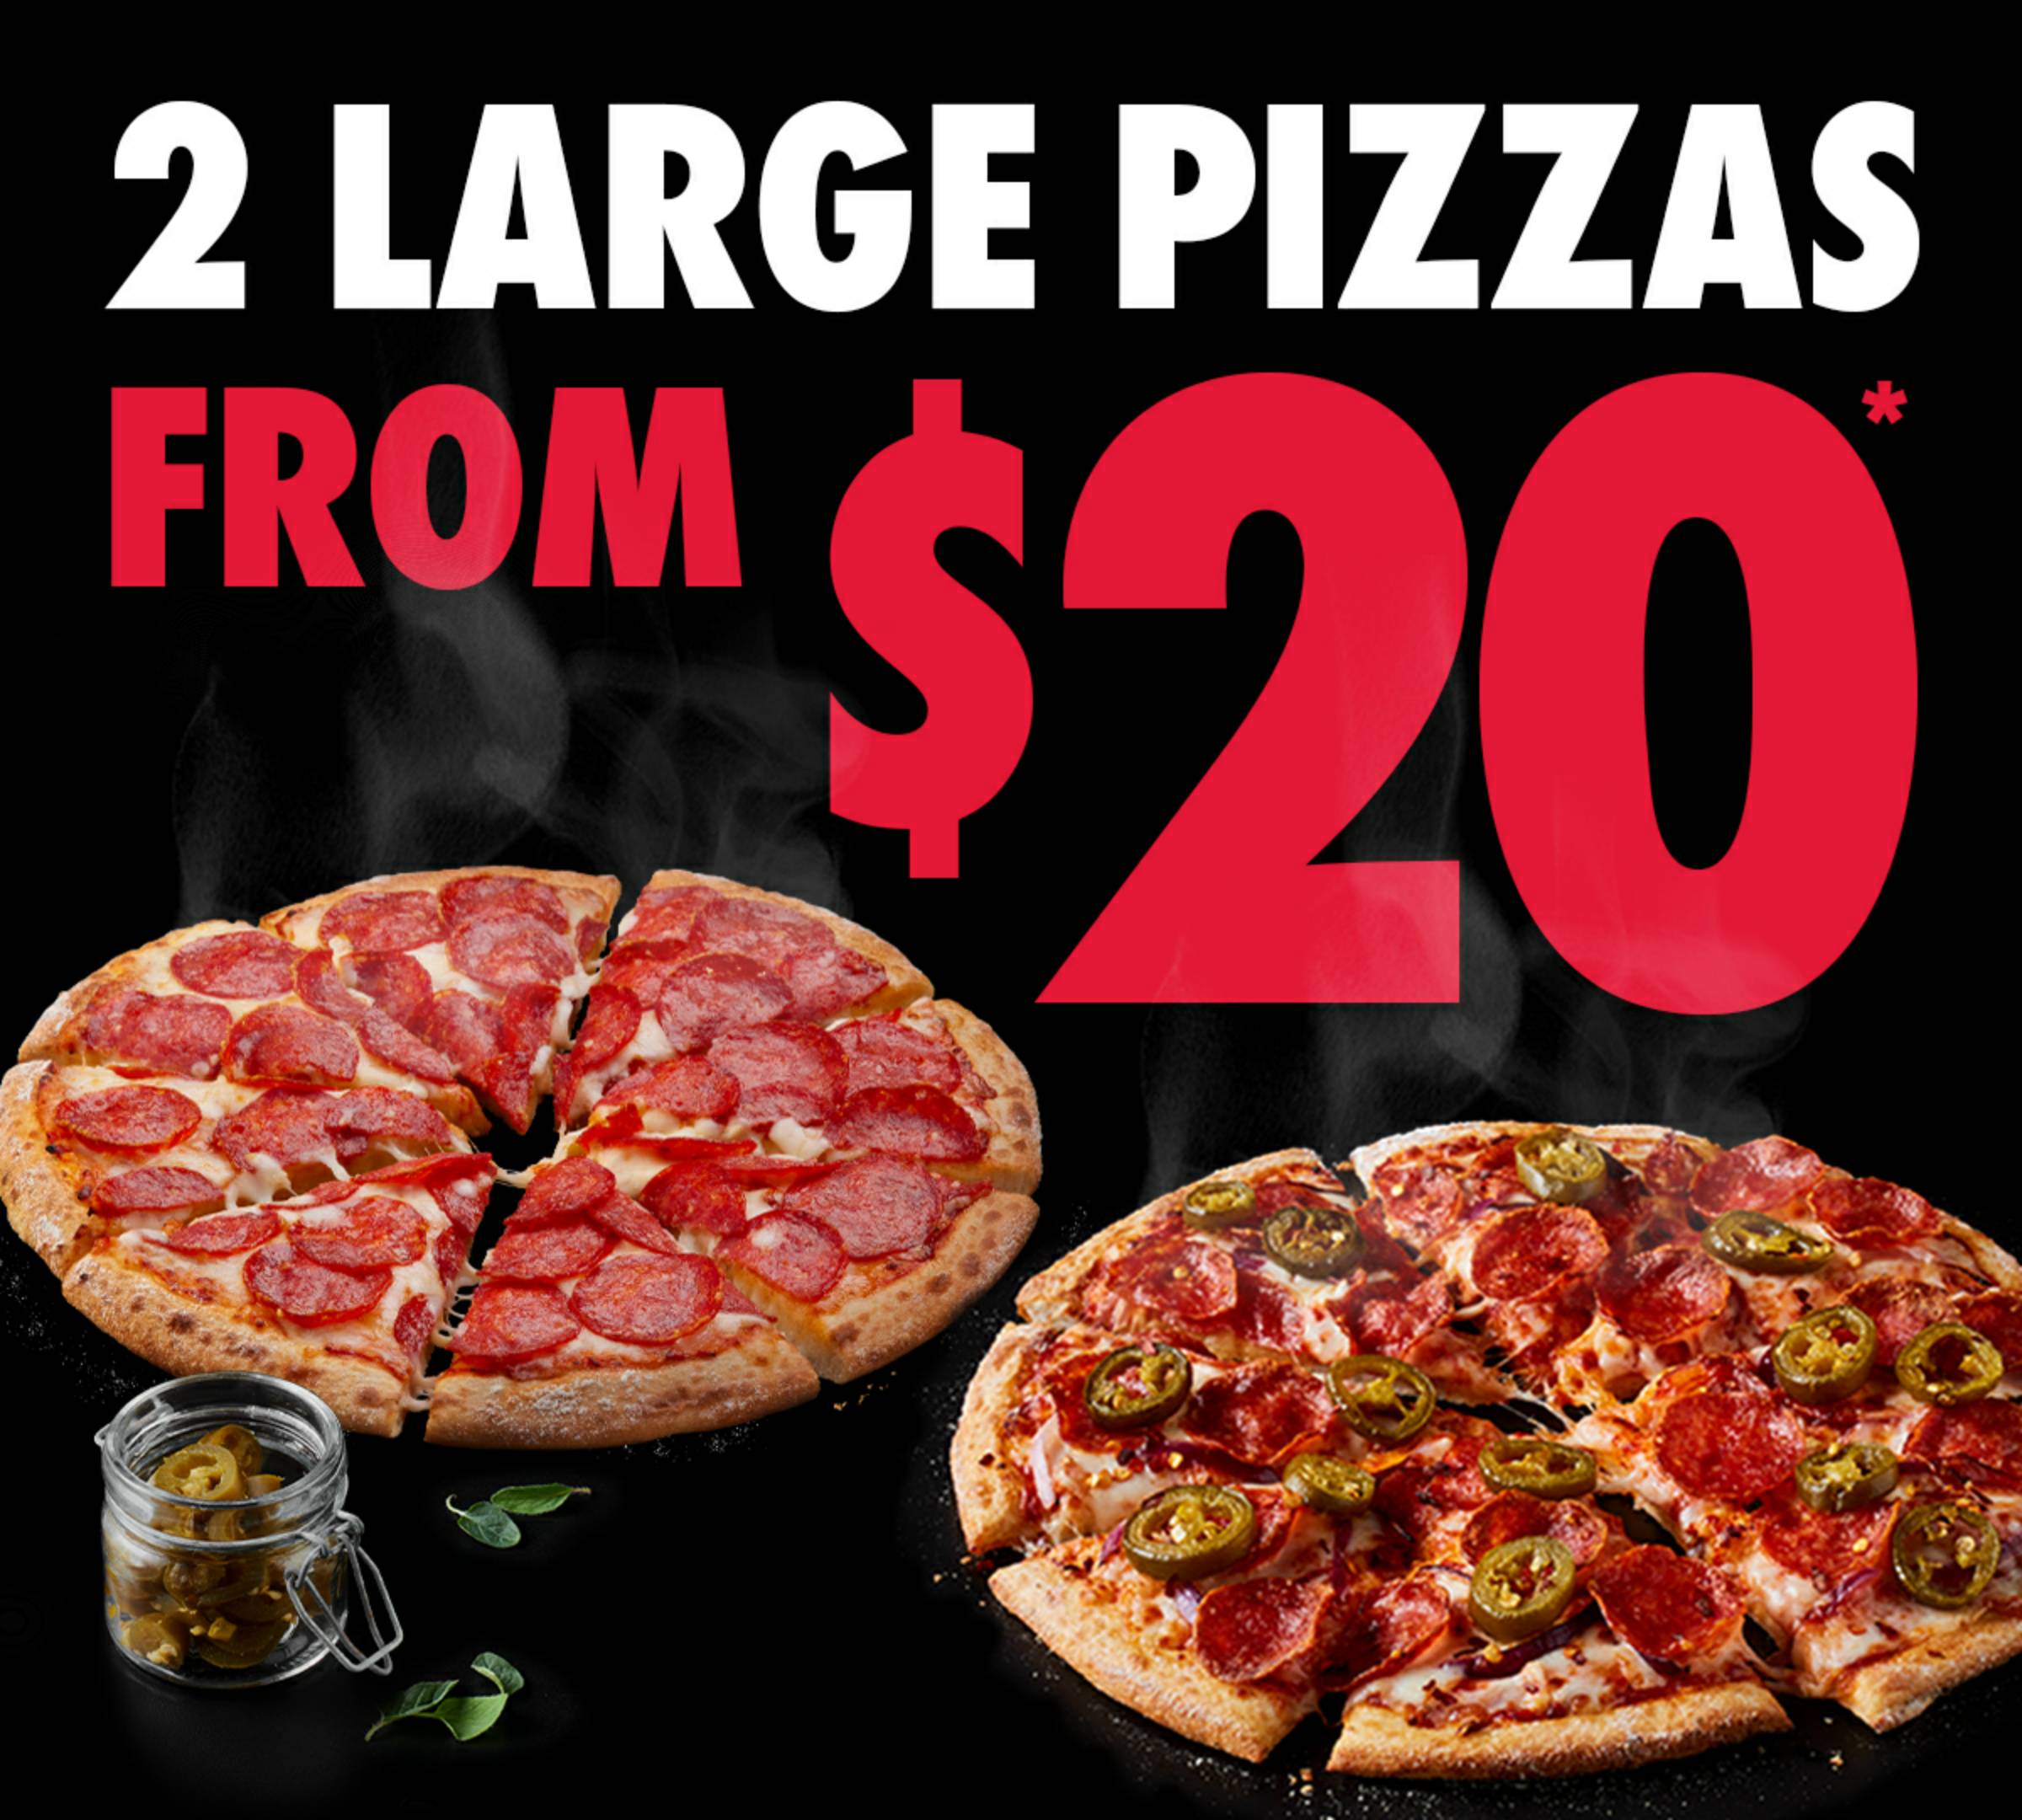 Domino's - Domino’s 2 Large Pizzas $20